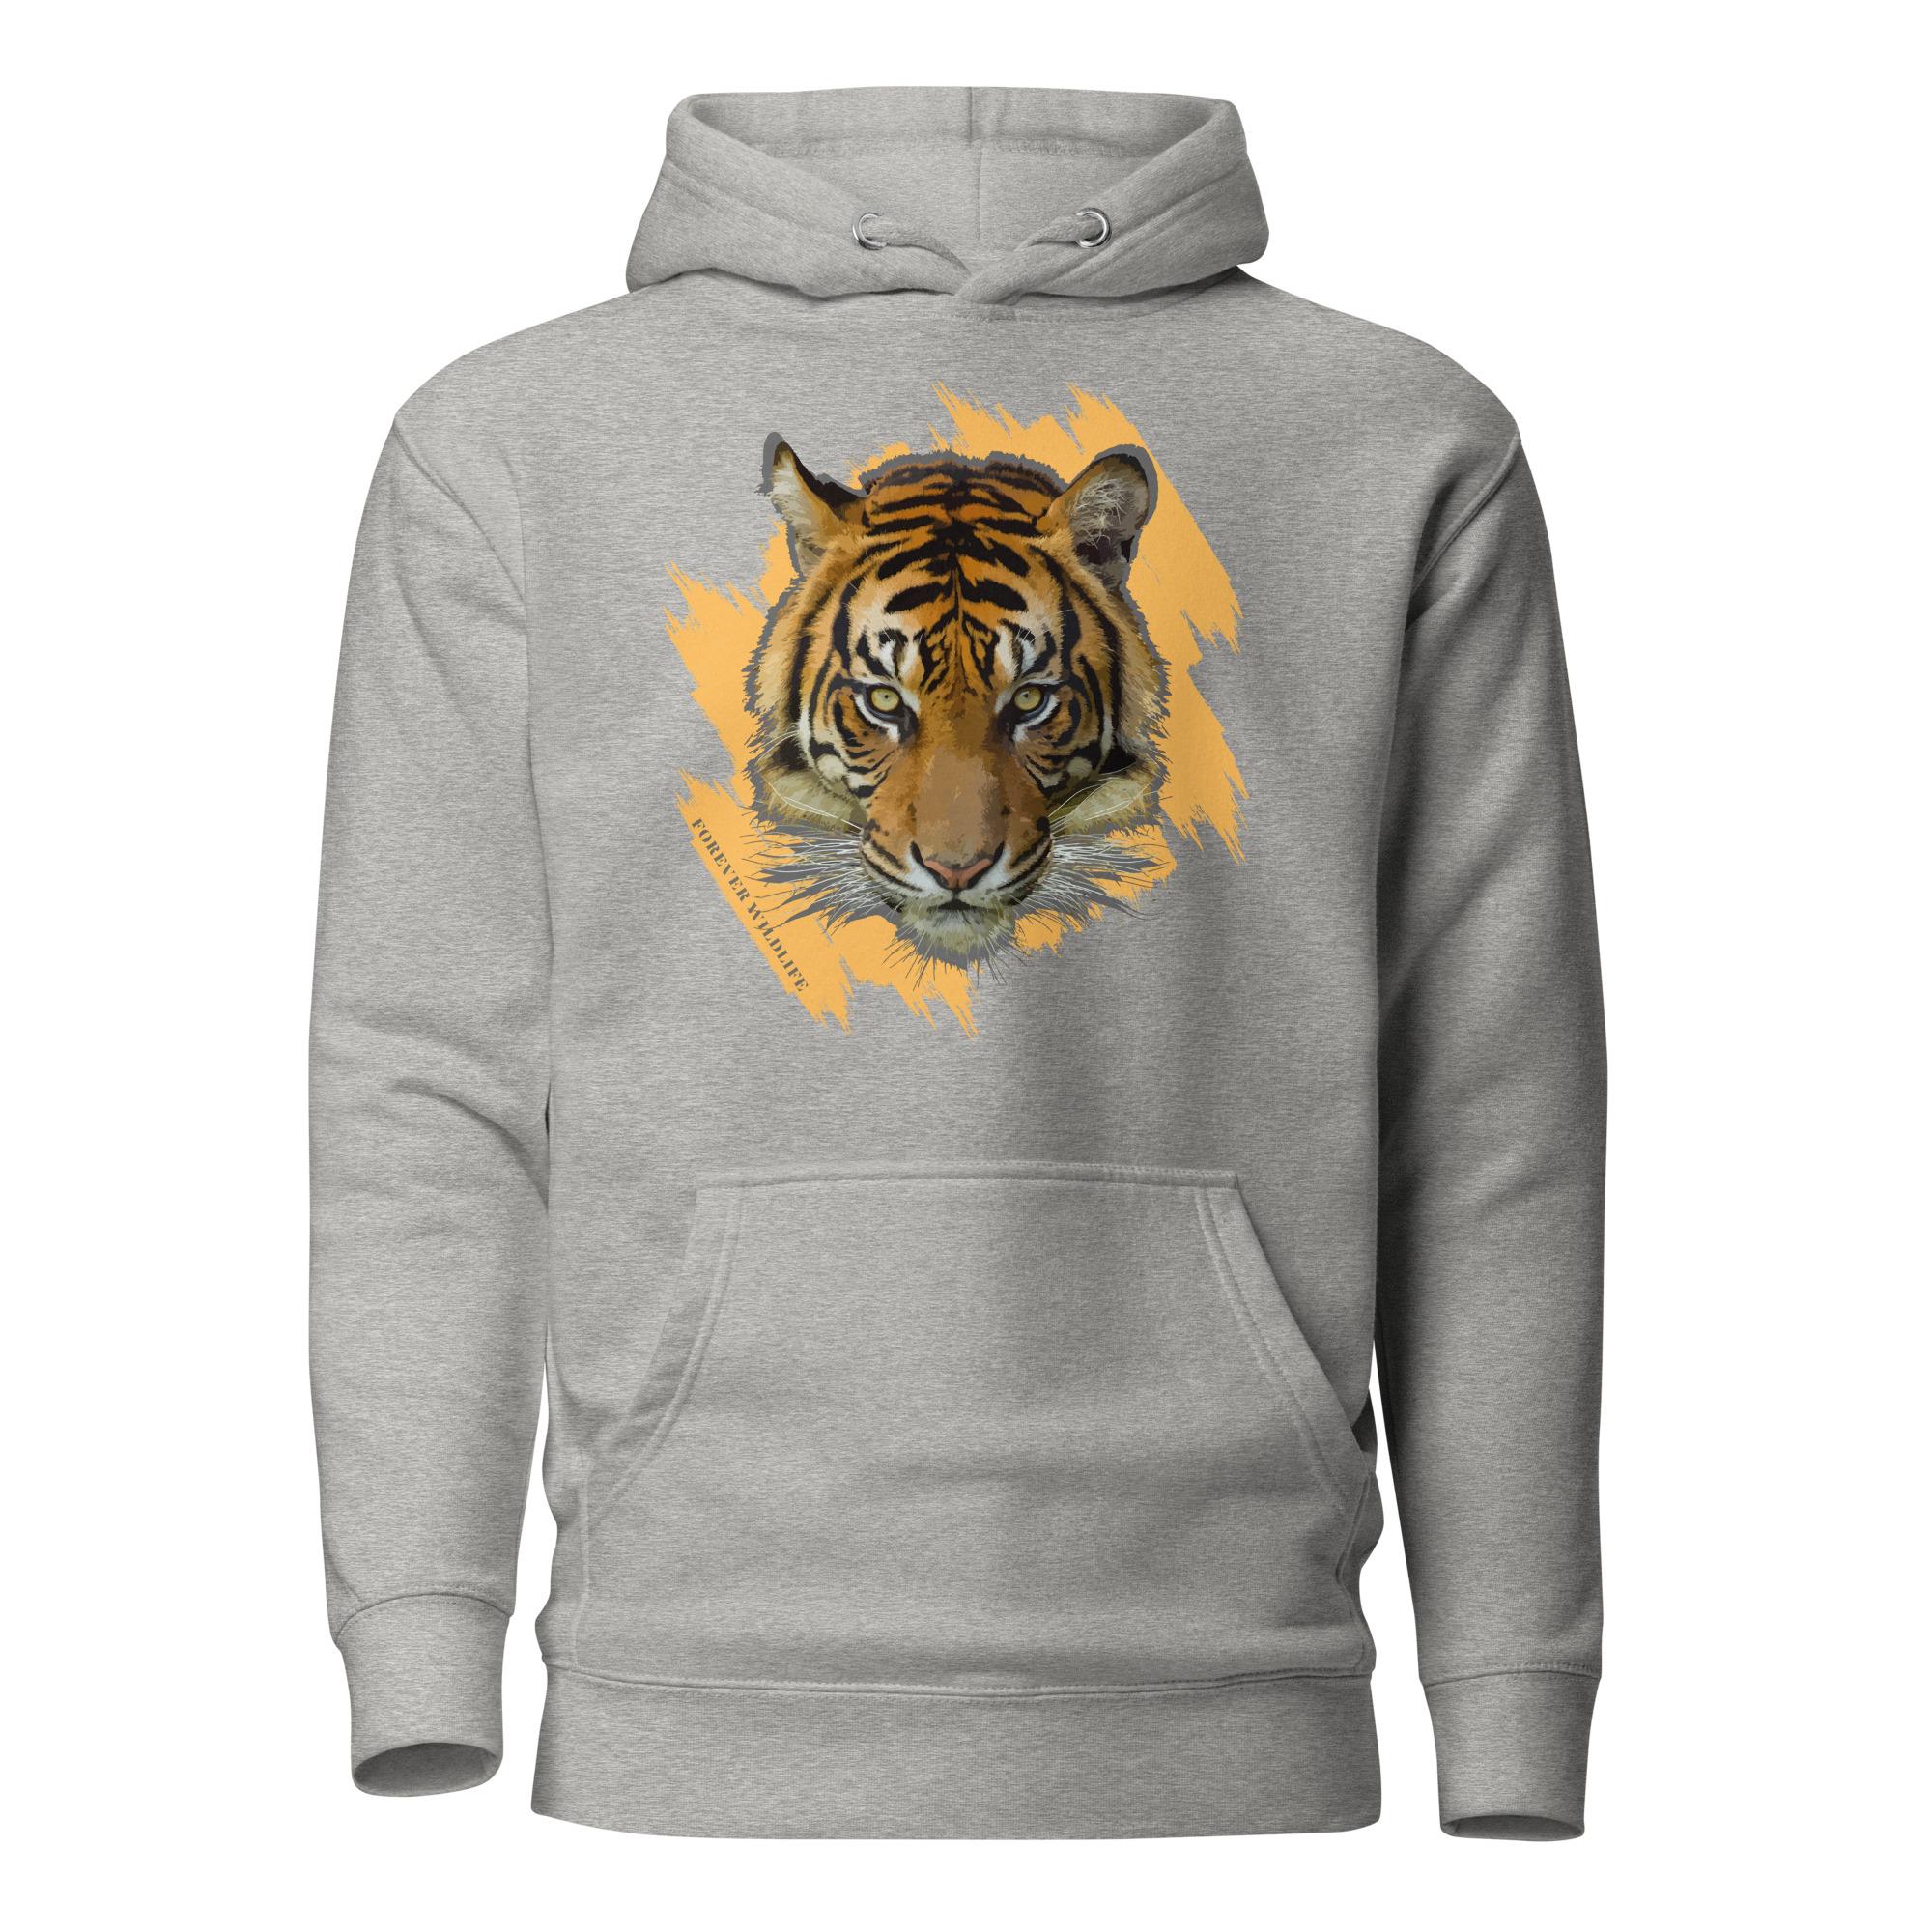 Tiger Face Hoodie in Carbon Grey – Premium Wildlife Animal Inspirational Hoodie Design, part of Wildlife Hoodies & Clothing from Forever Wildlife